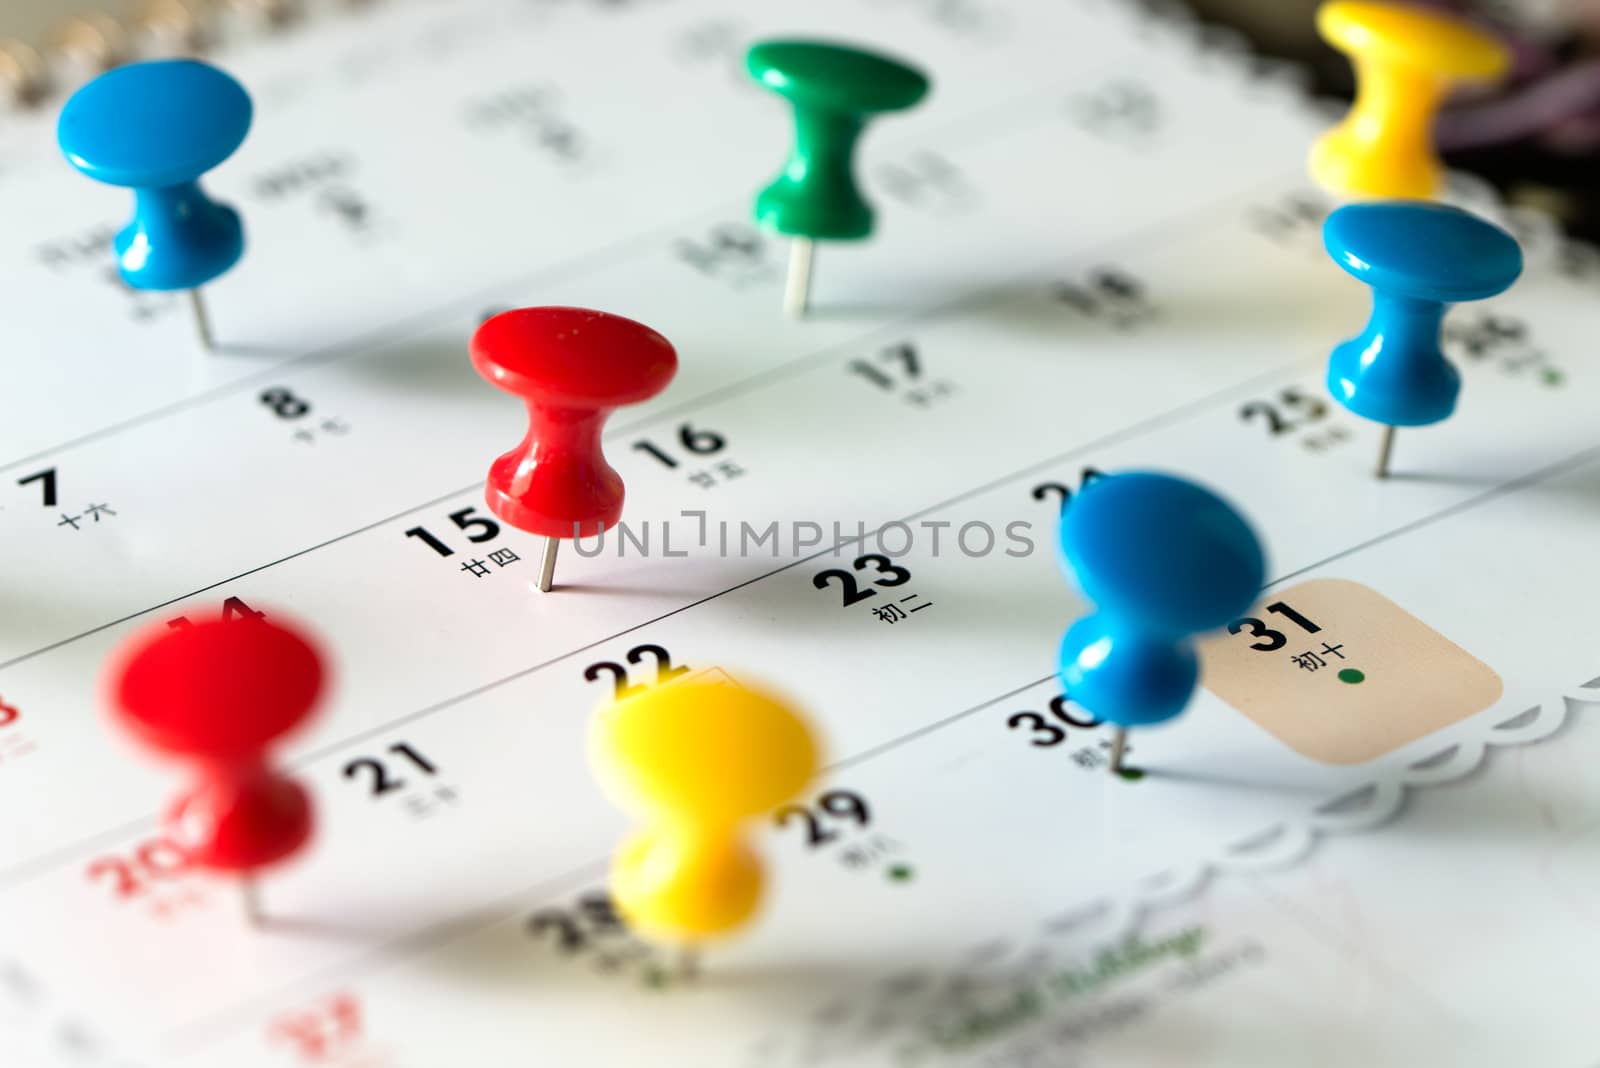 Thumb tack pins on calendar as reminder by Kenishirotie